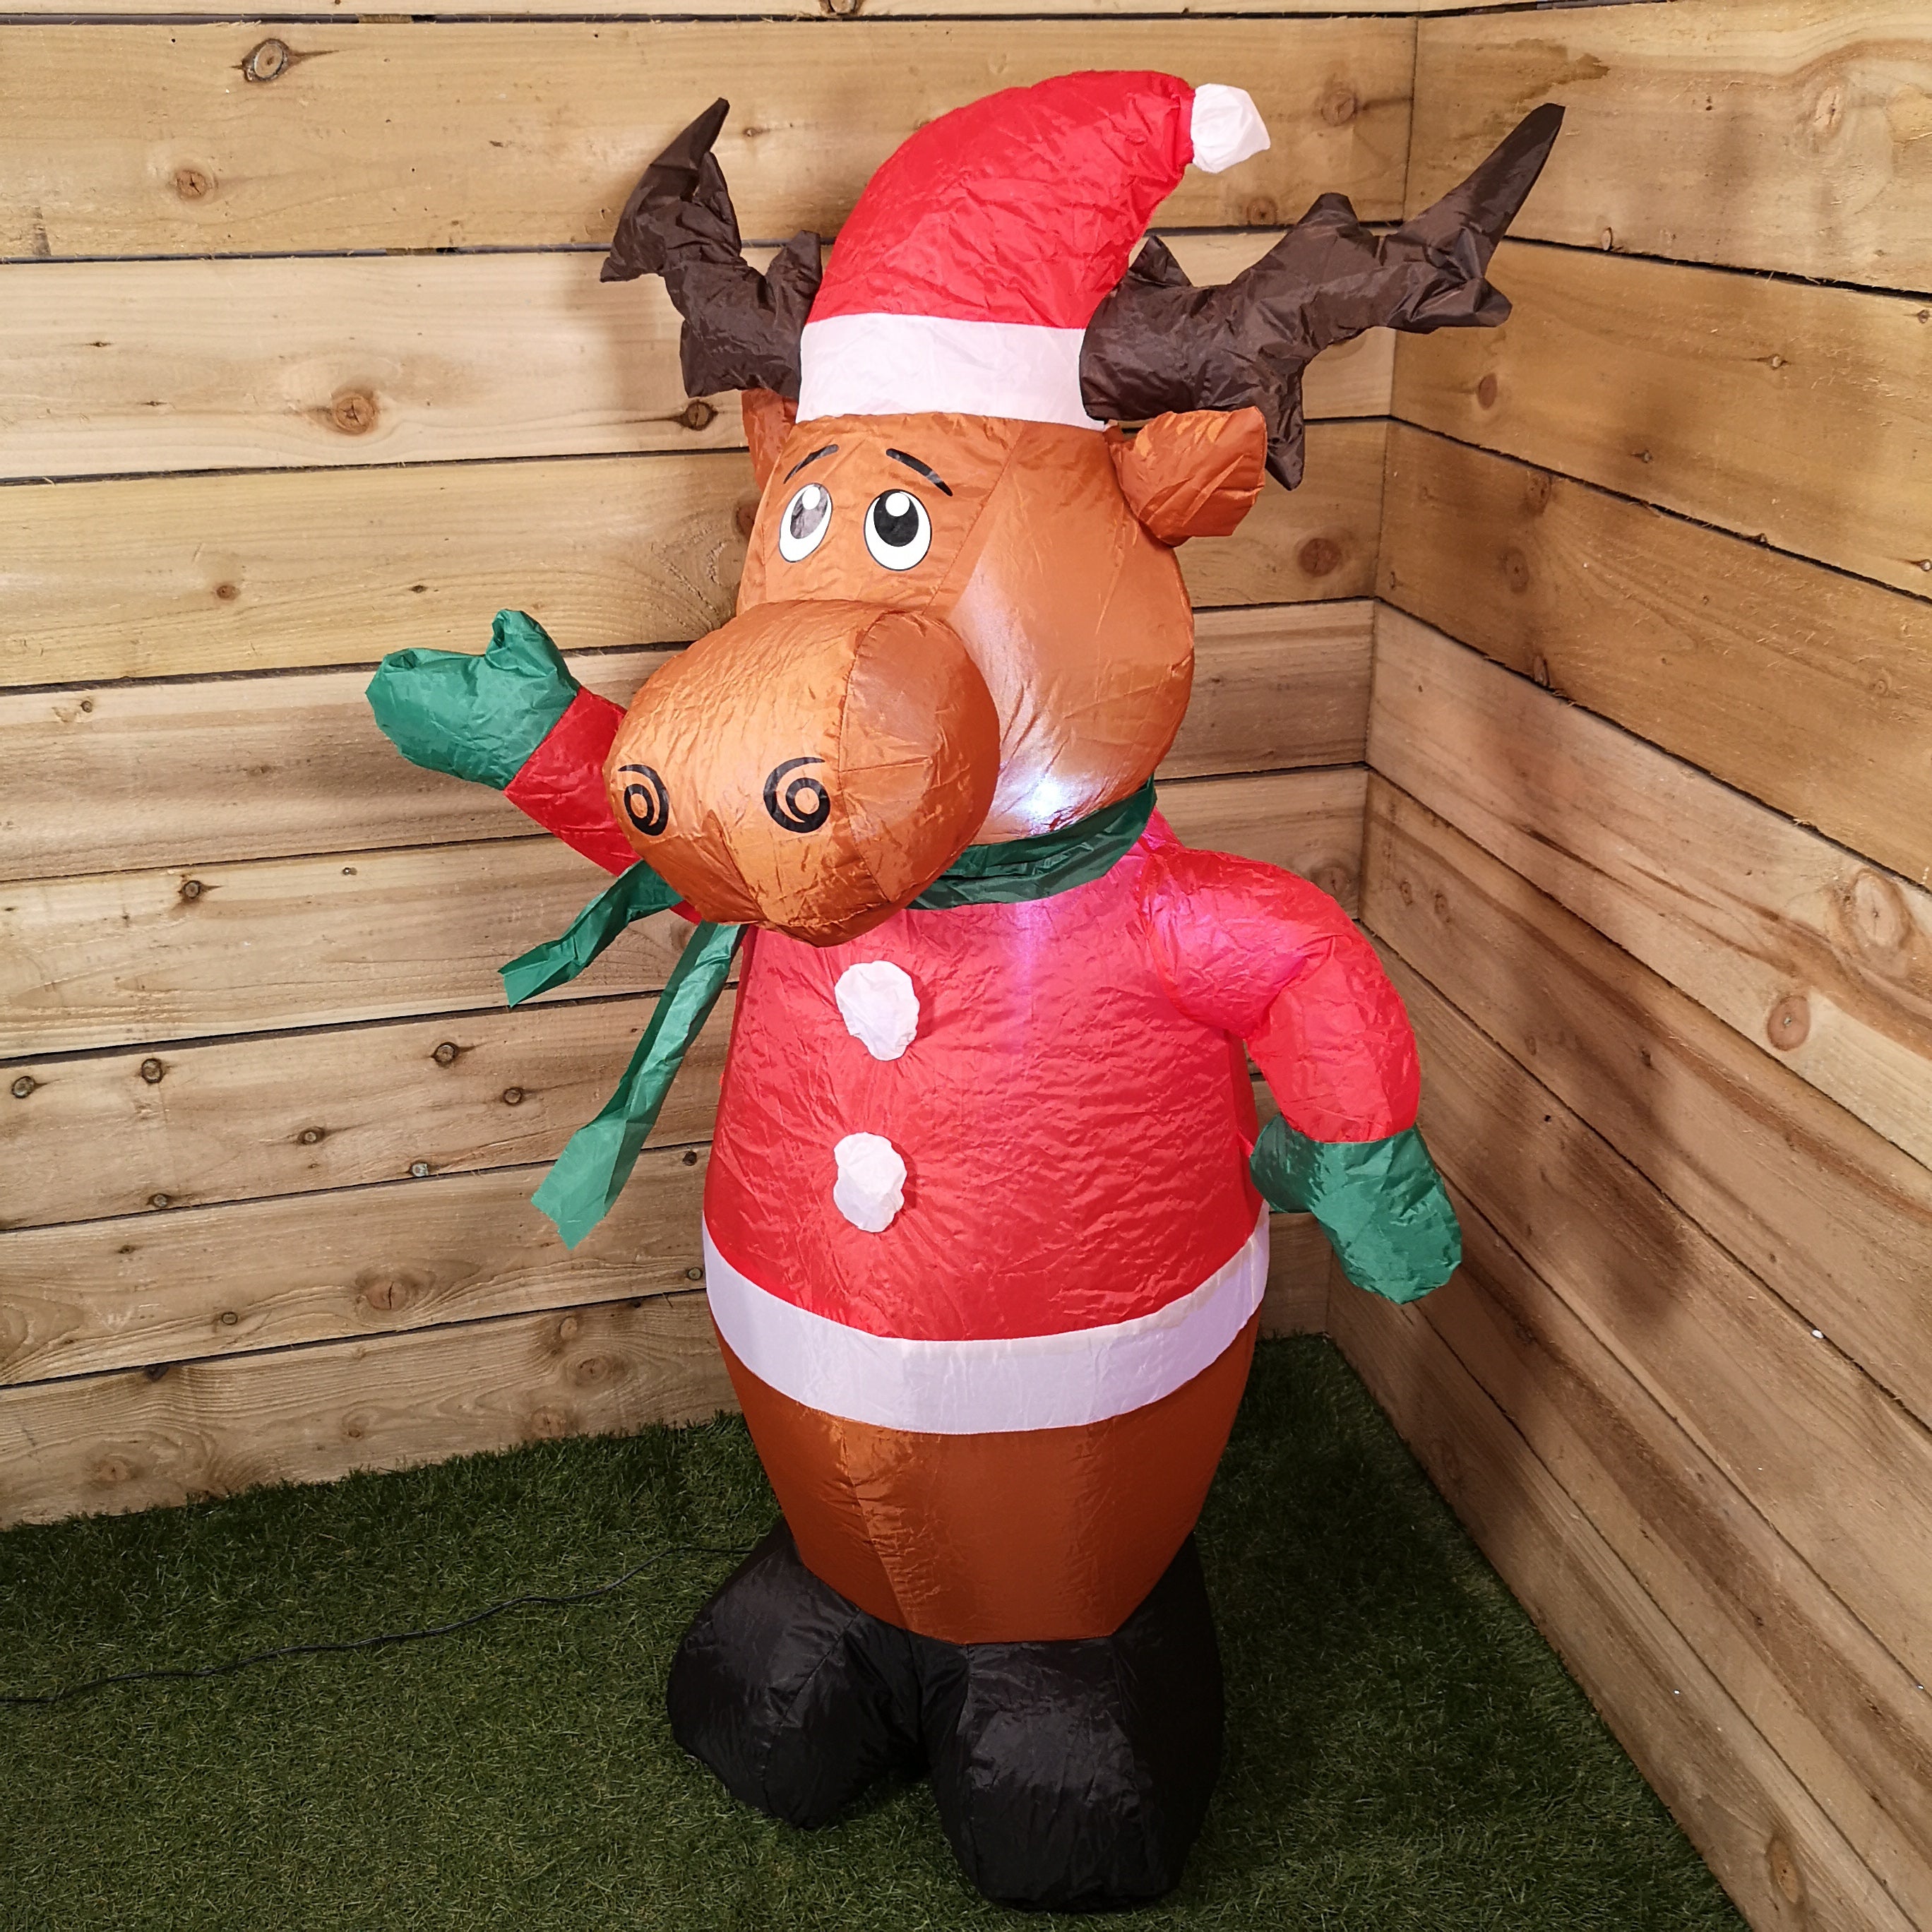 120cm Illuminated Christmas Inflatable Festive Reindeer